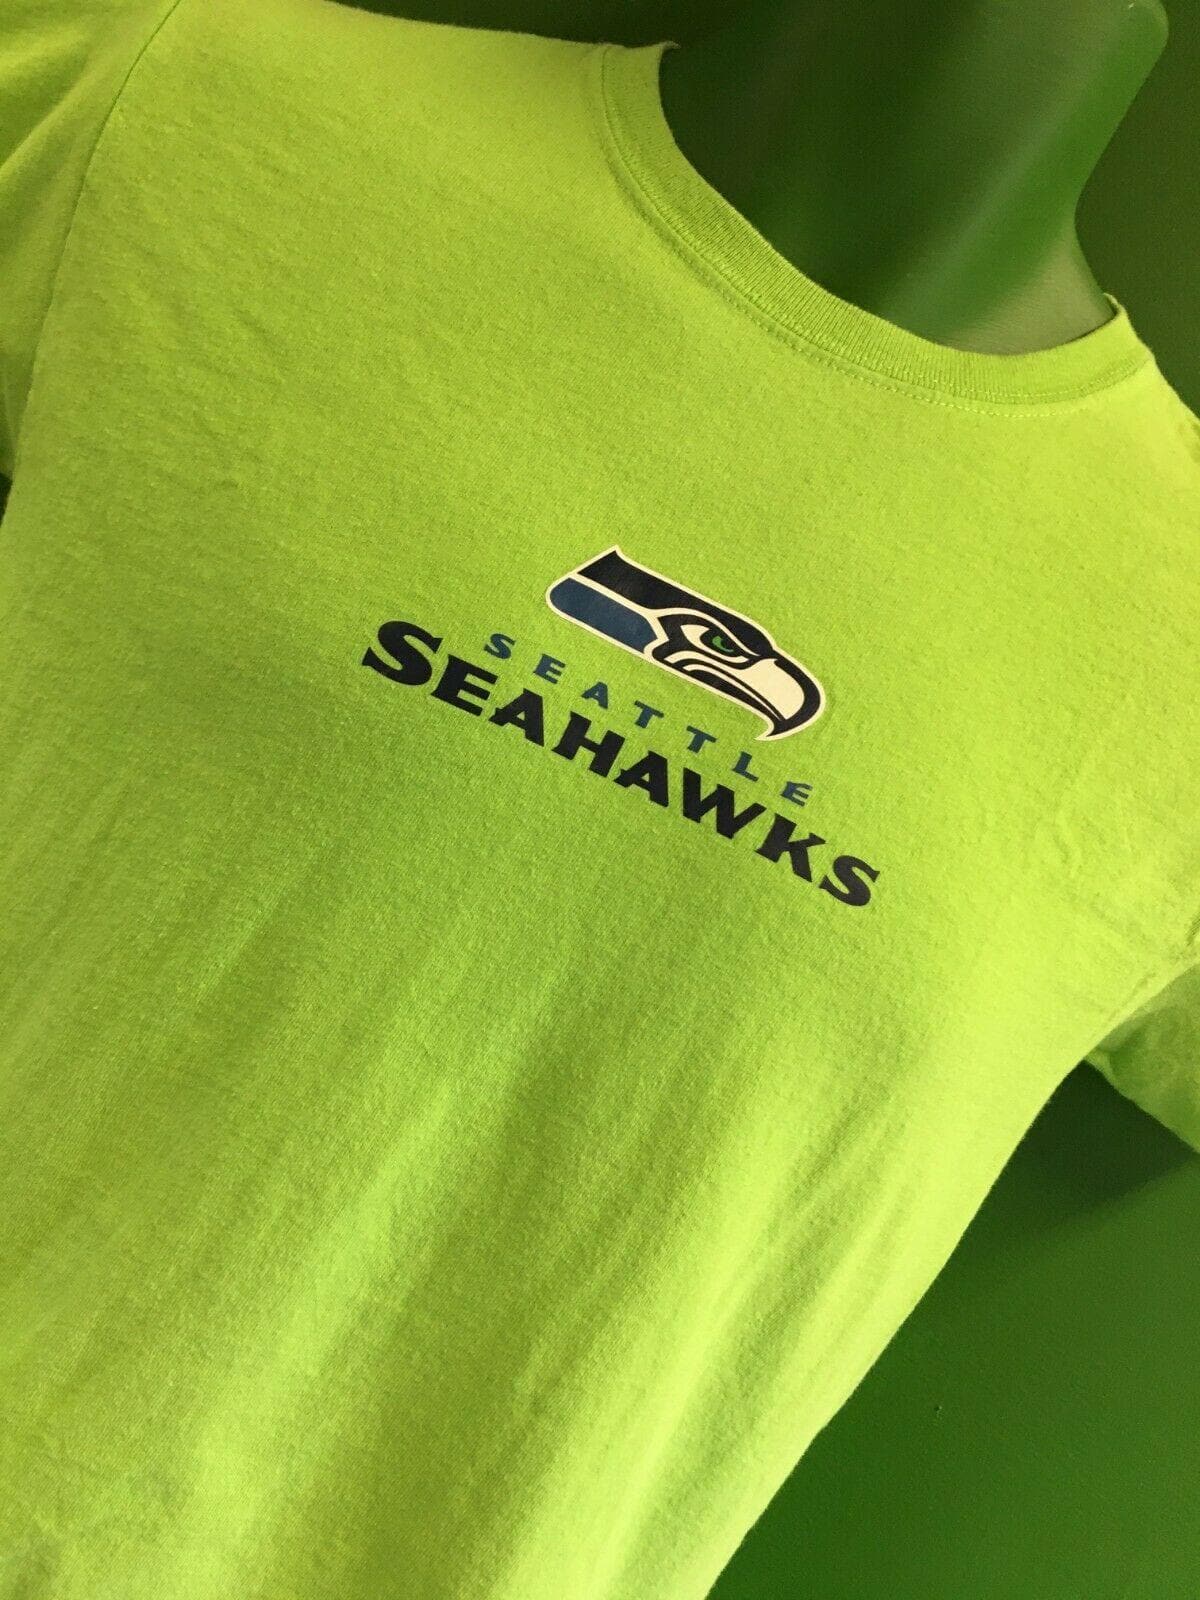 NFL Seattle Seahawks Lime Green T-Shirt Youth Medium 10-12